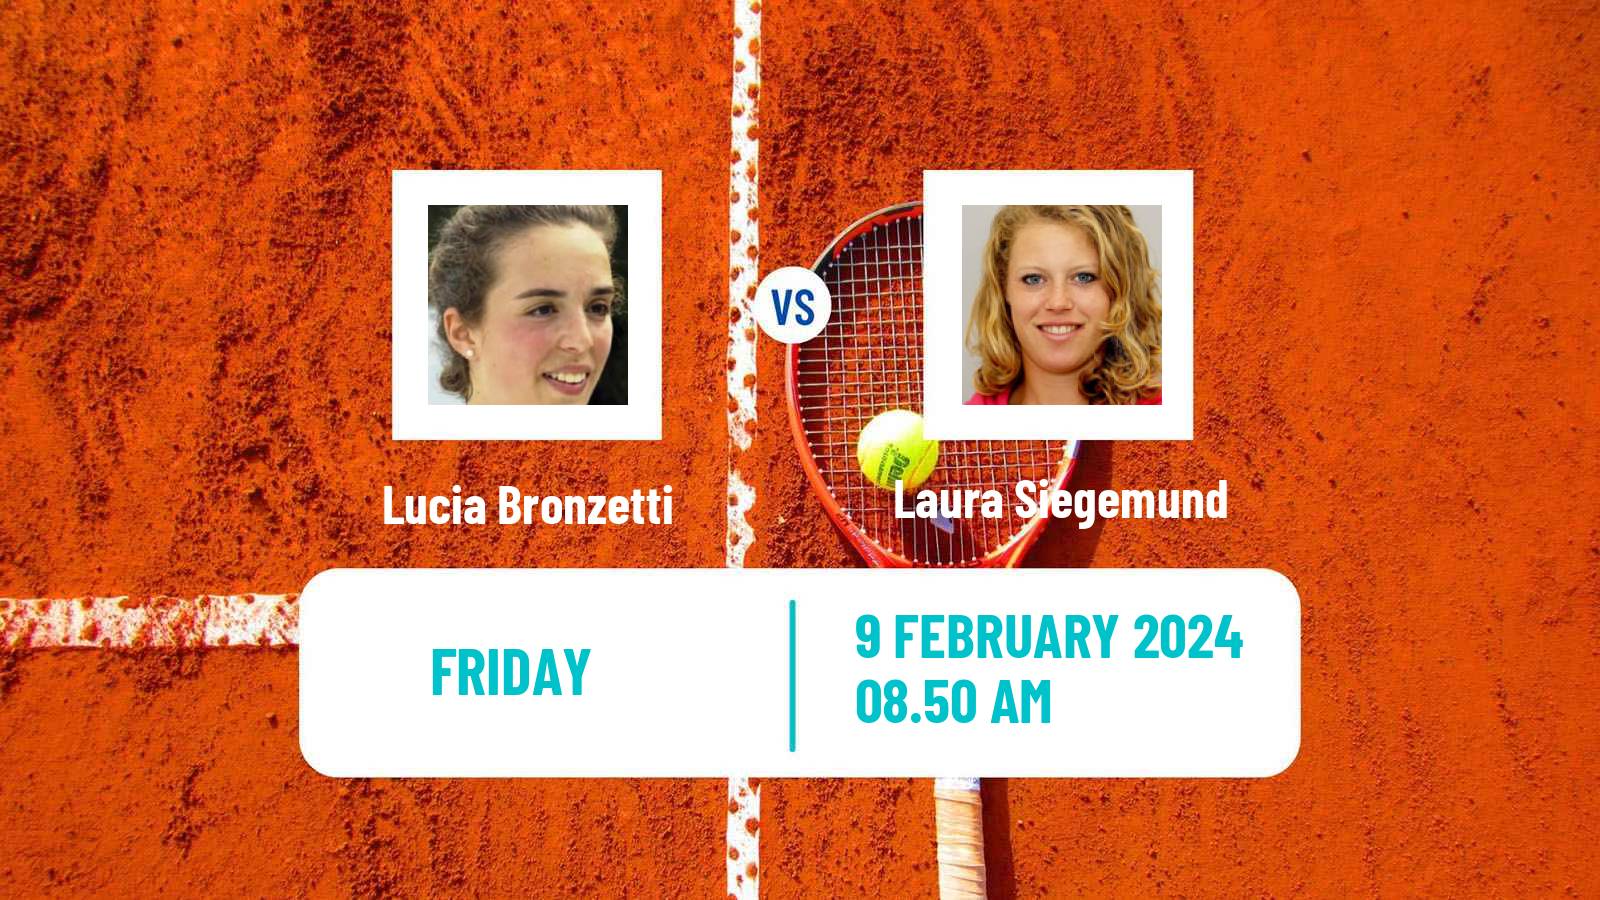 Tennis WTA Doha Lucia Bronzetti - Laura Siegemund